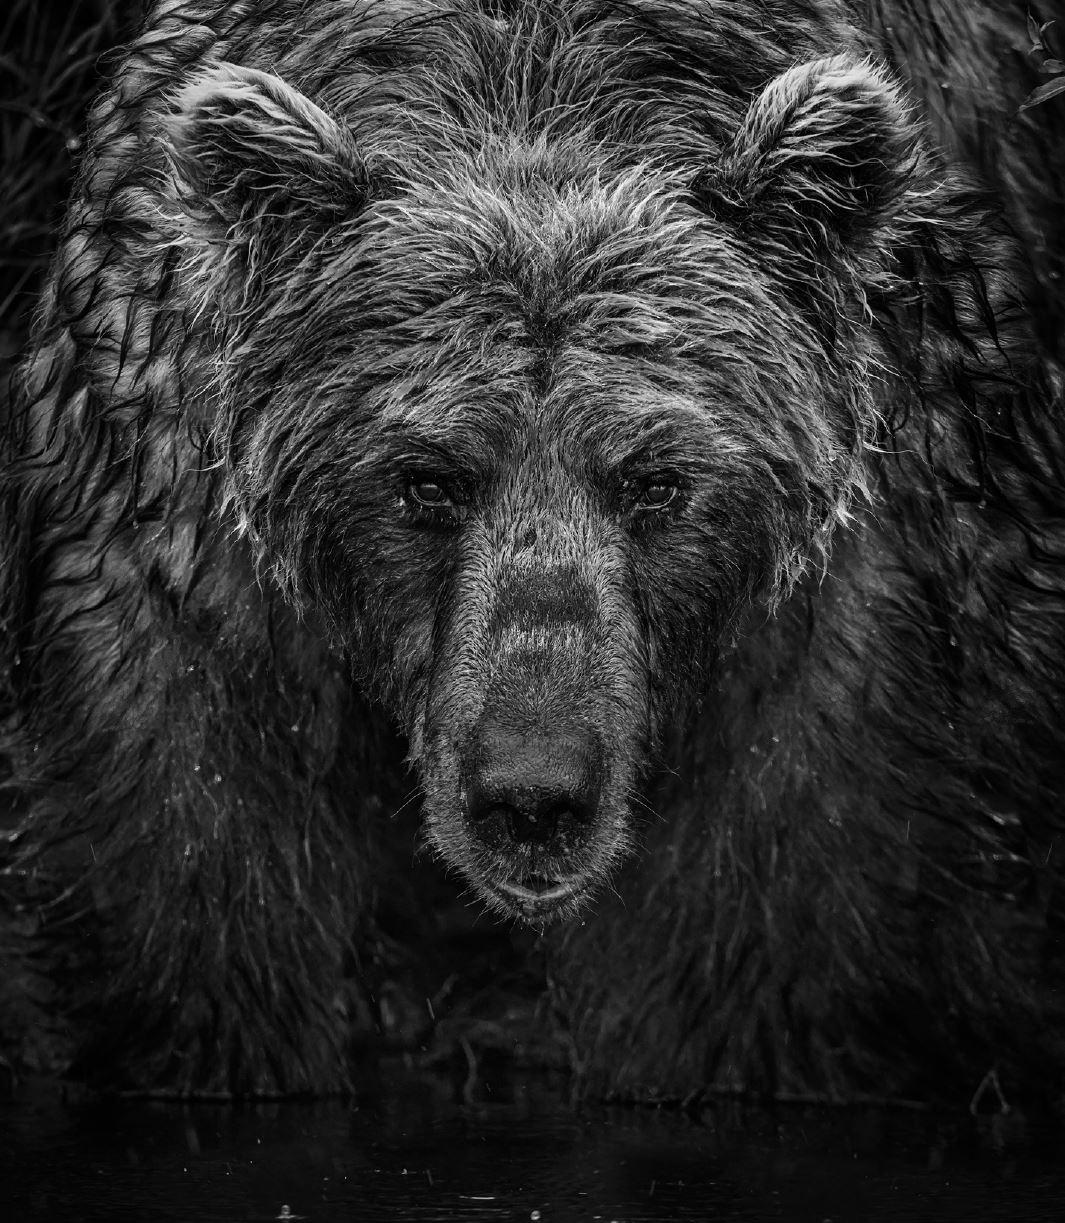 David Yarrow Figurative Photograph - 'Wet, Wet, Wet' - portrait of a bear in the rain, fine art photography, 2023